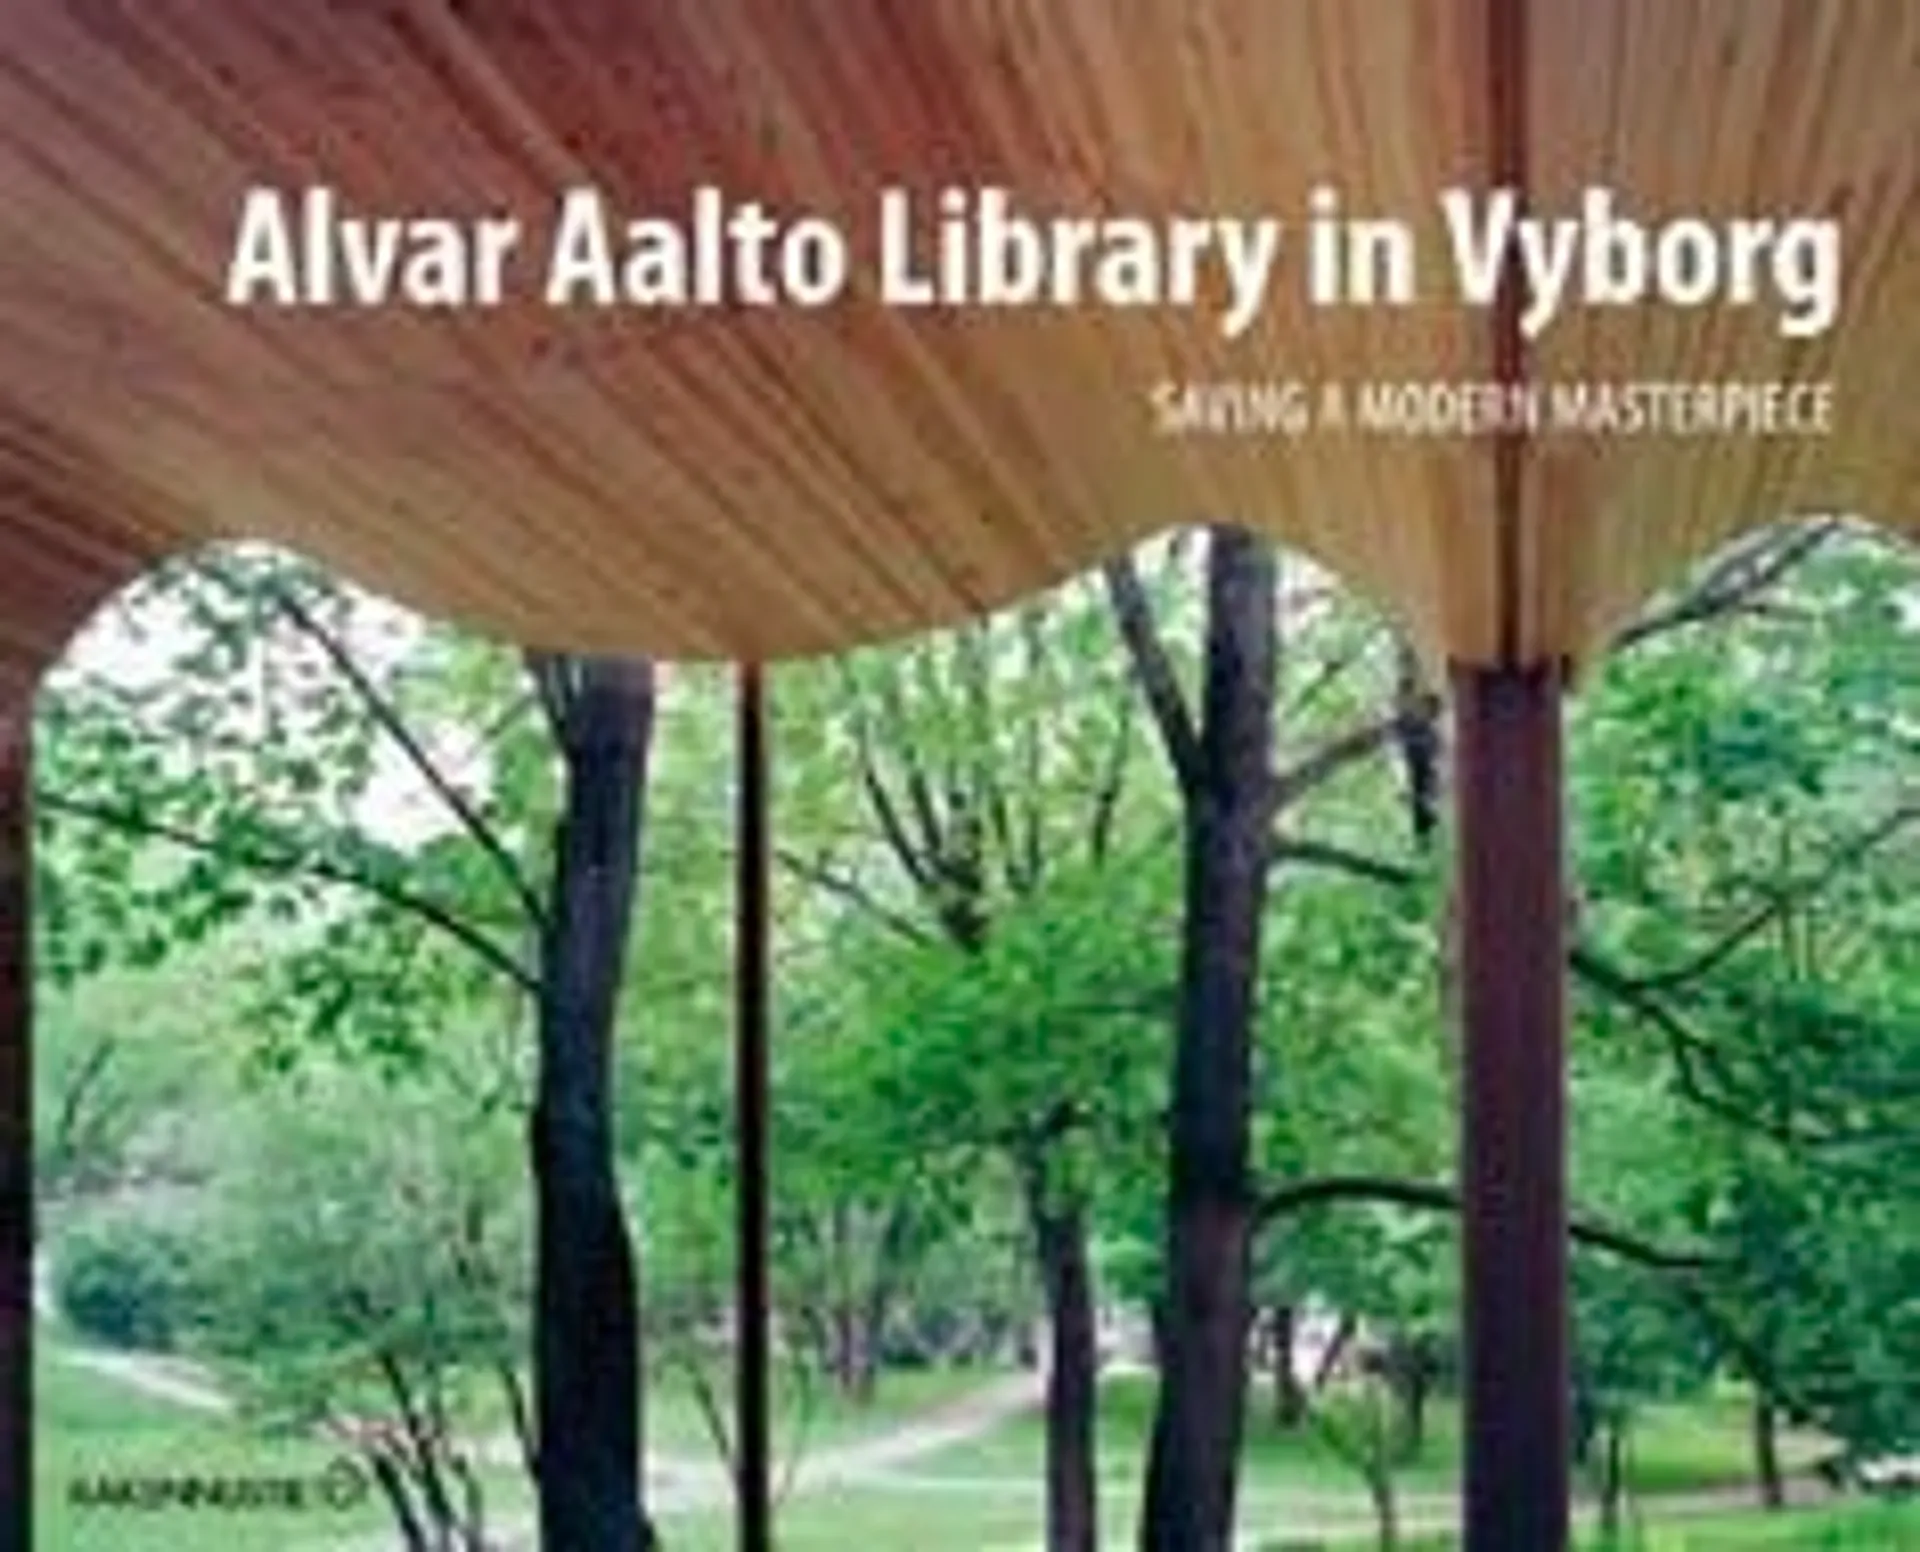 Alvar Aalto Library in Vyborg - Saving a Modern Masterpiece